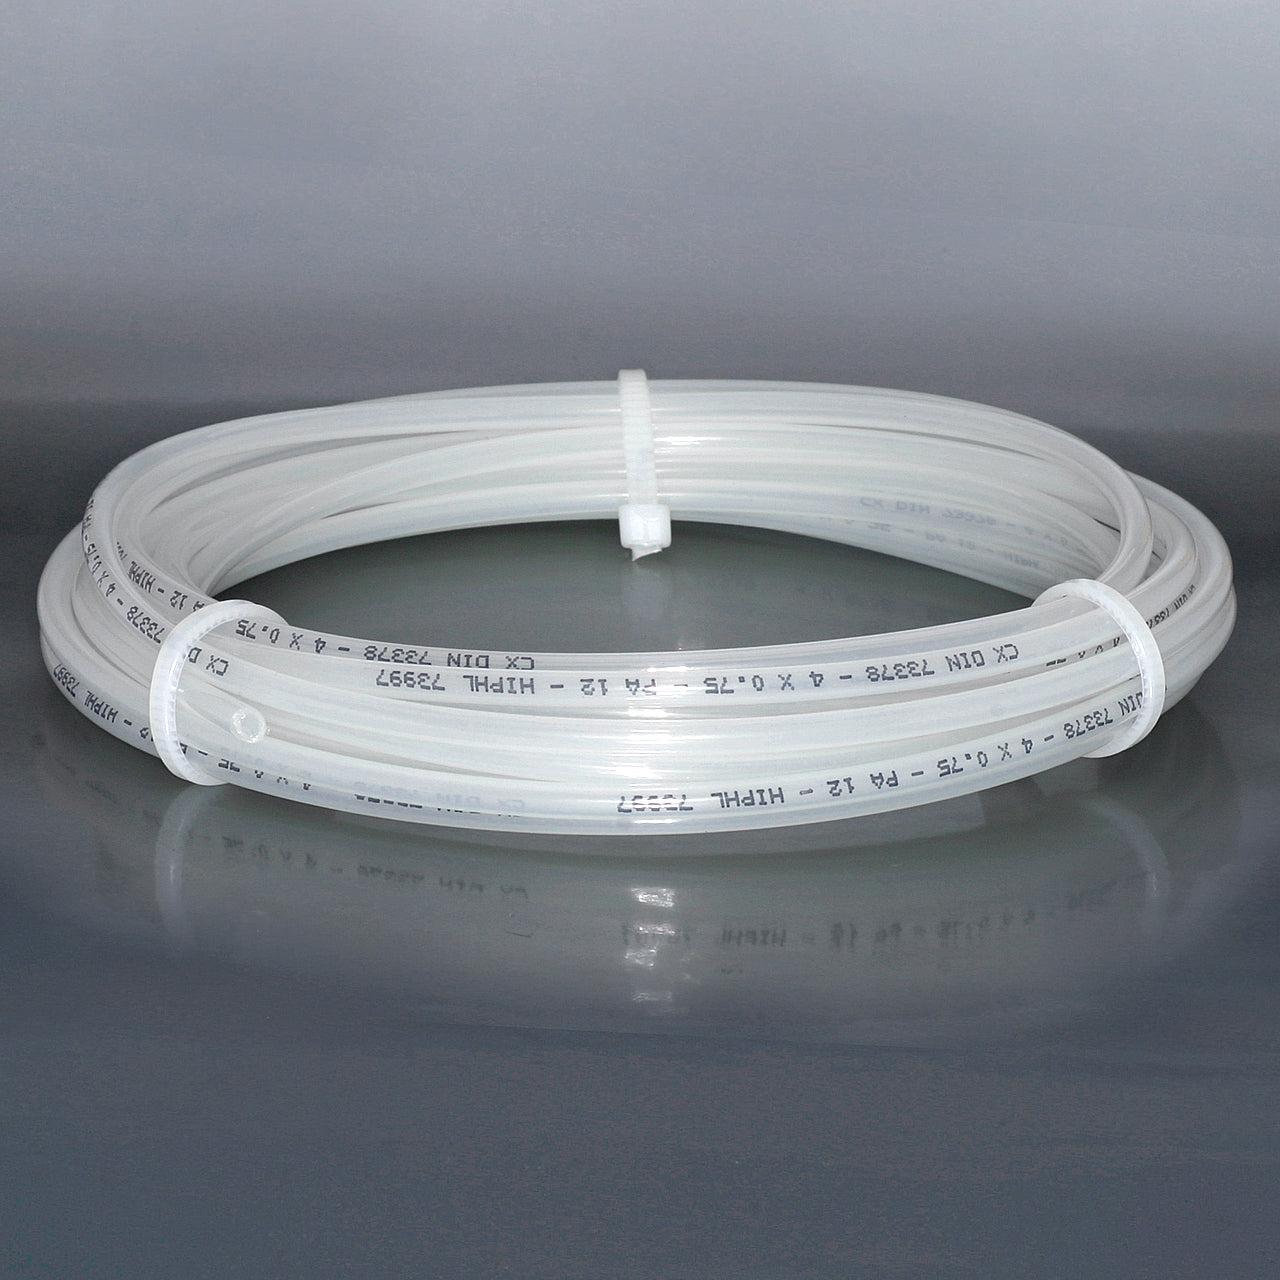 AQUAMIST 806-261 Translucient nylon hose 4 x 2.5 mm (4 length options) Photo-0 